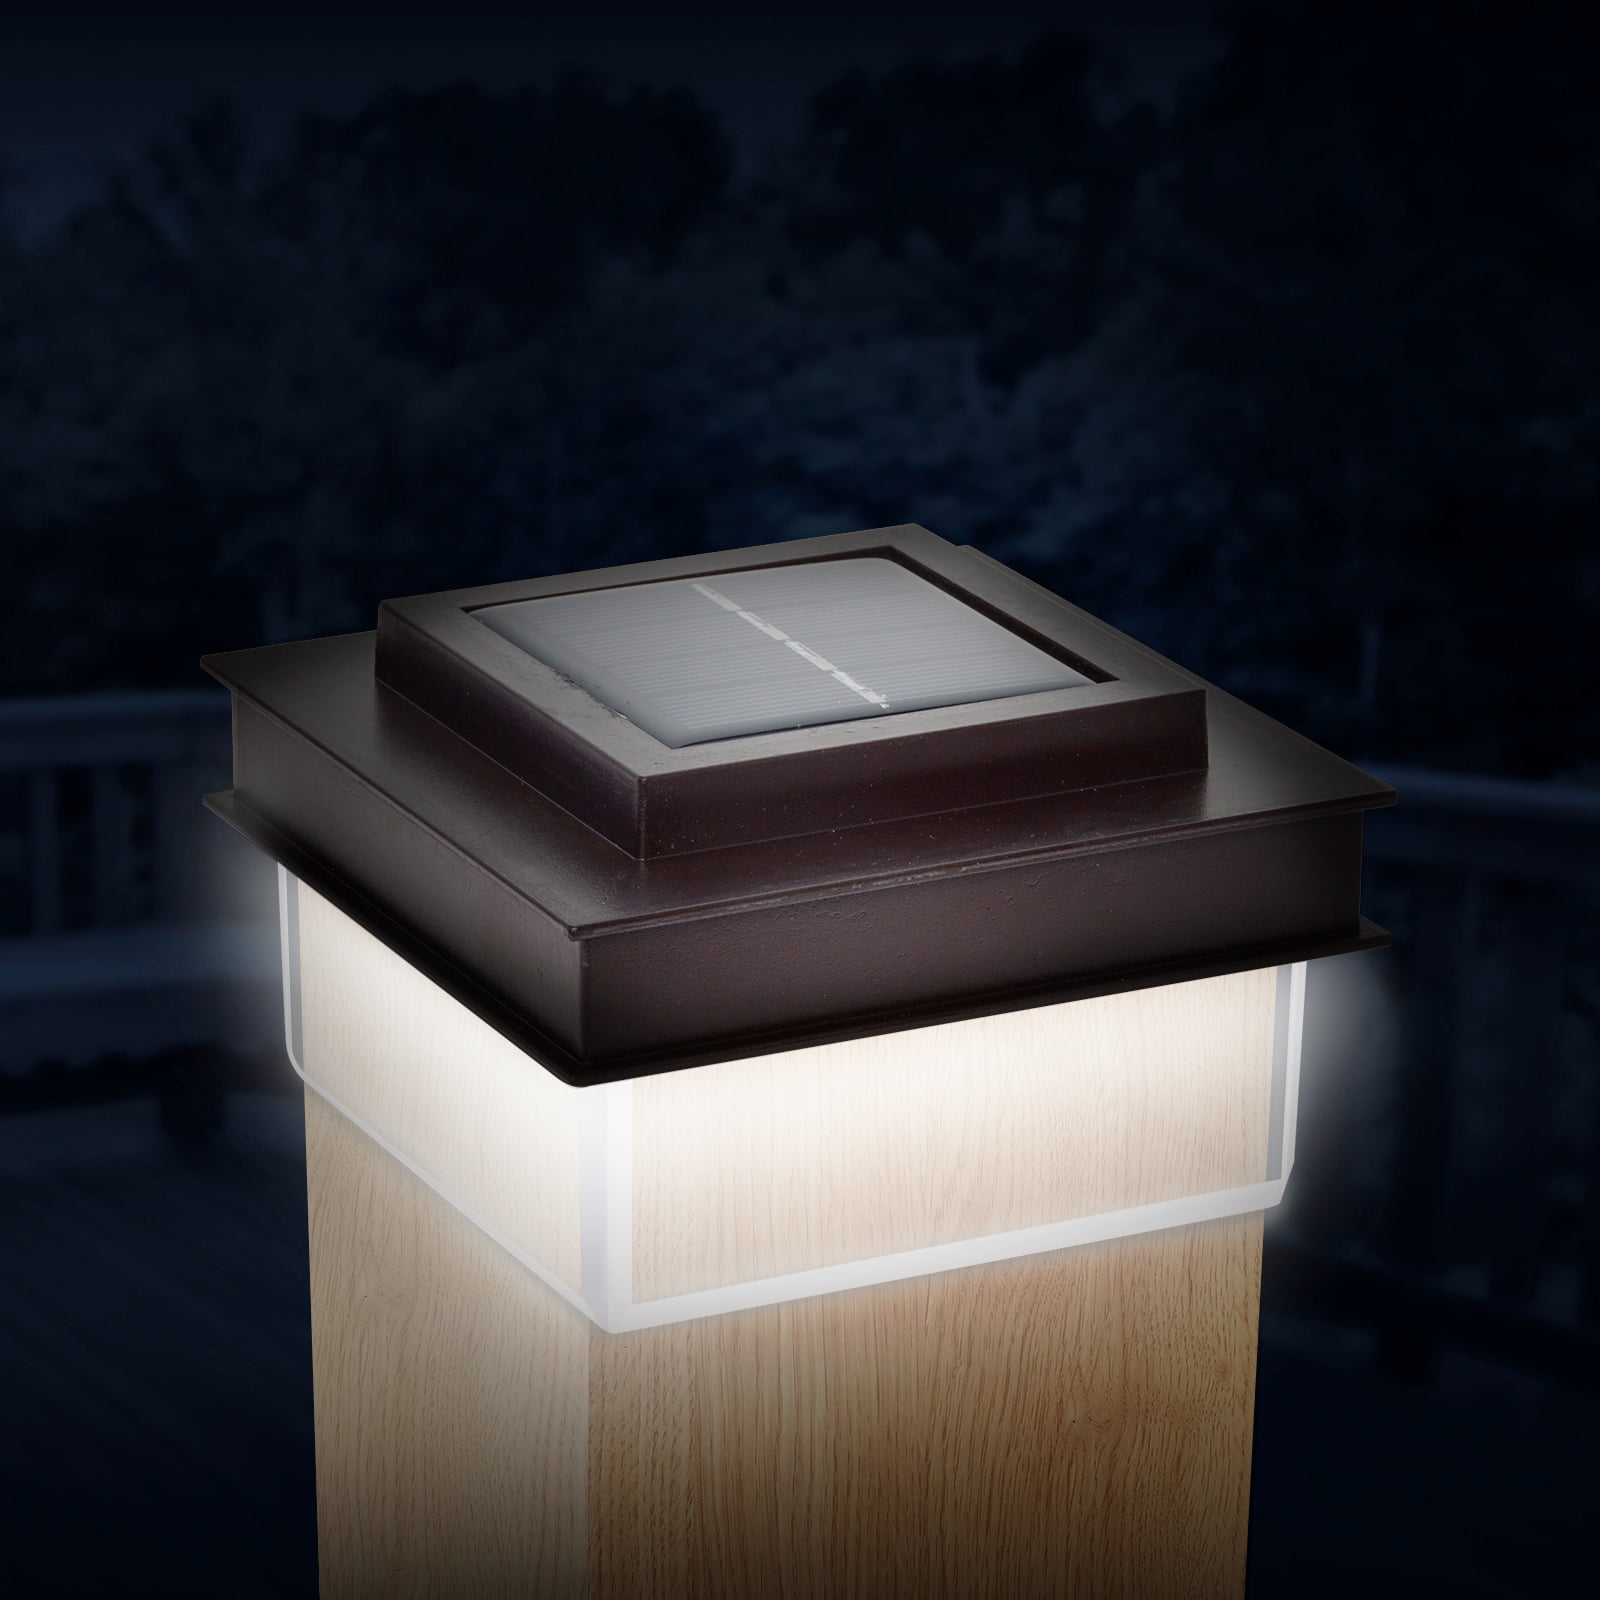 GreenLighting Translucent 12 Lumen LED Solar Powered Post Cap Light for 4x4 Nominal Wood Posts 4 Pack, Dark Brown